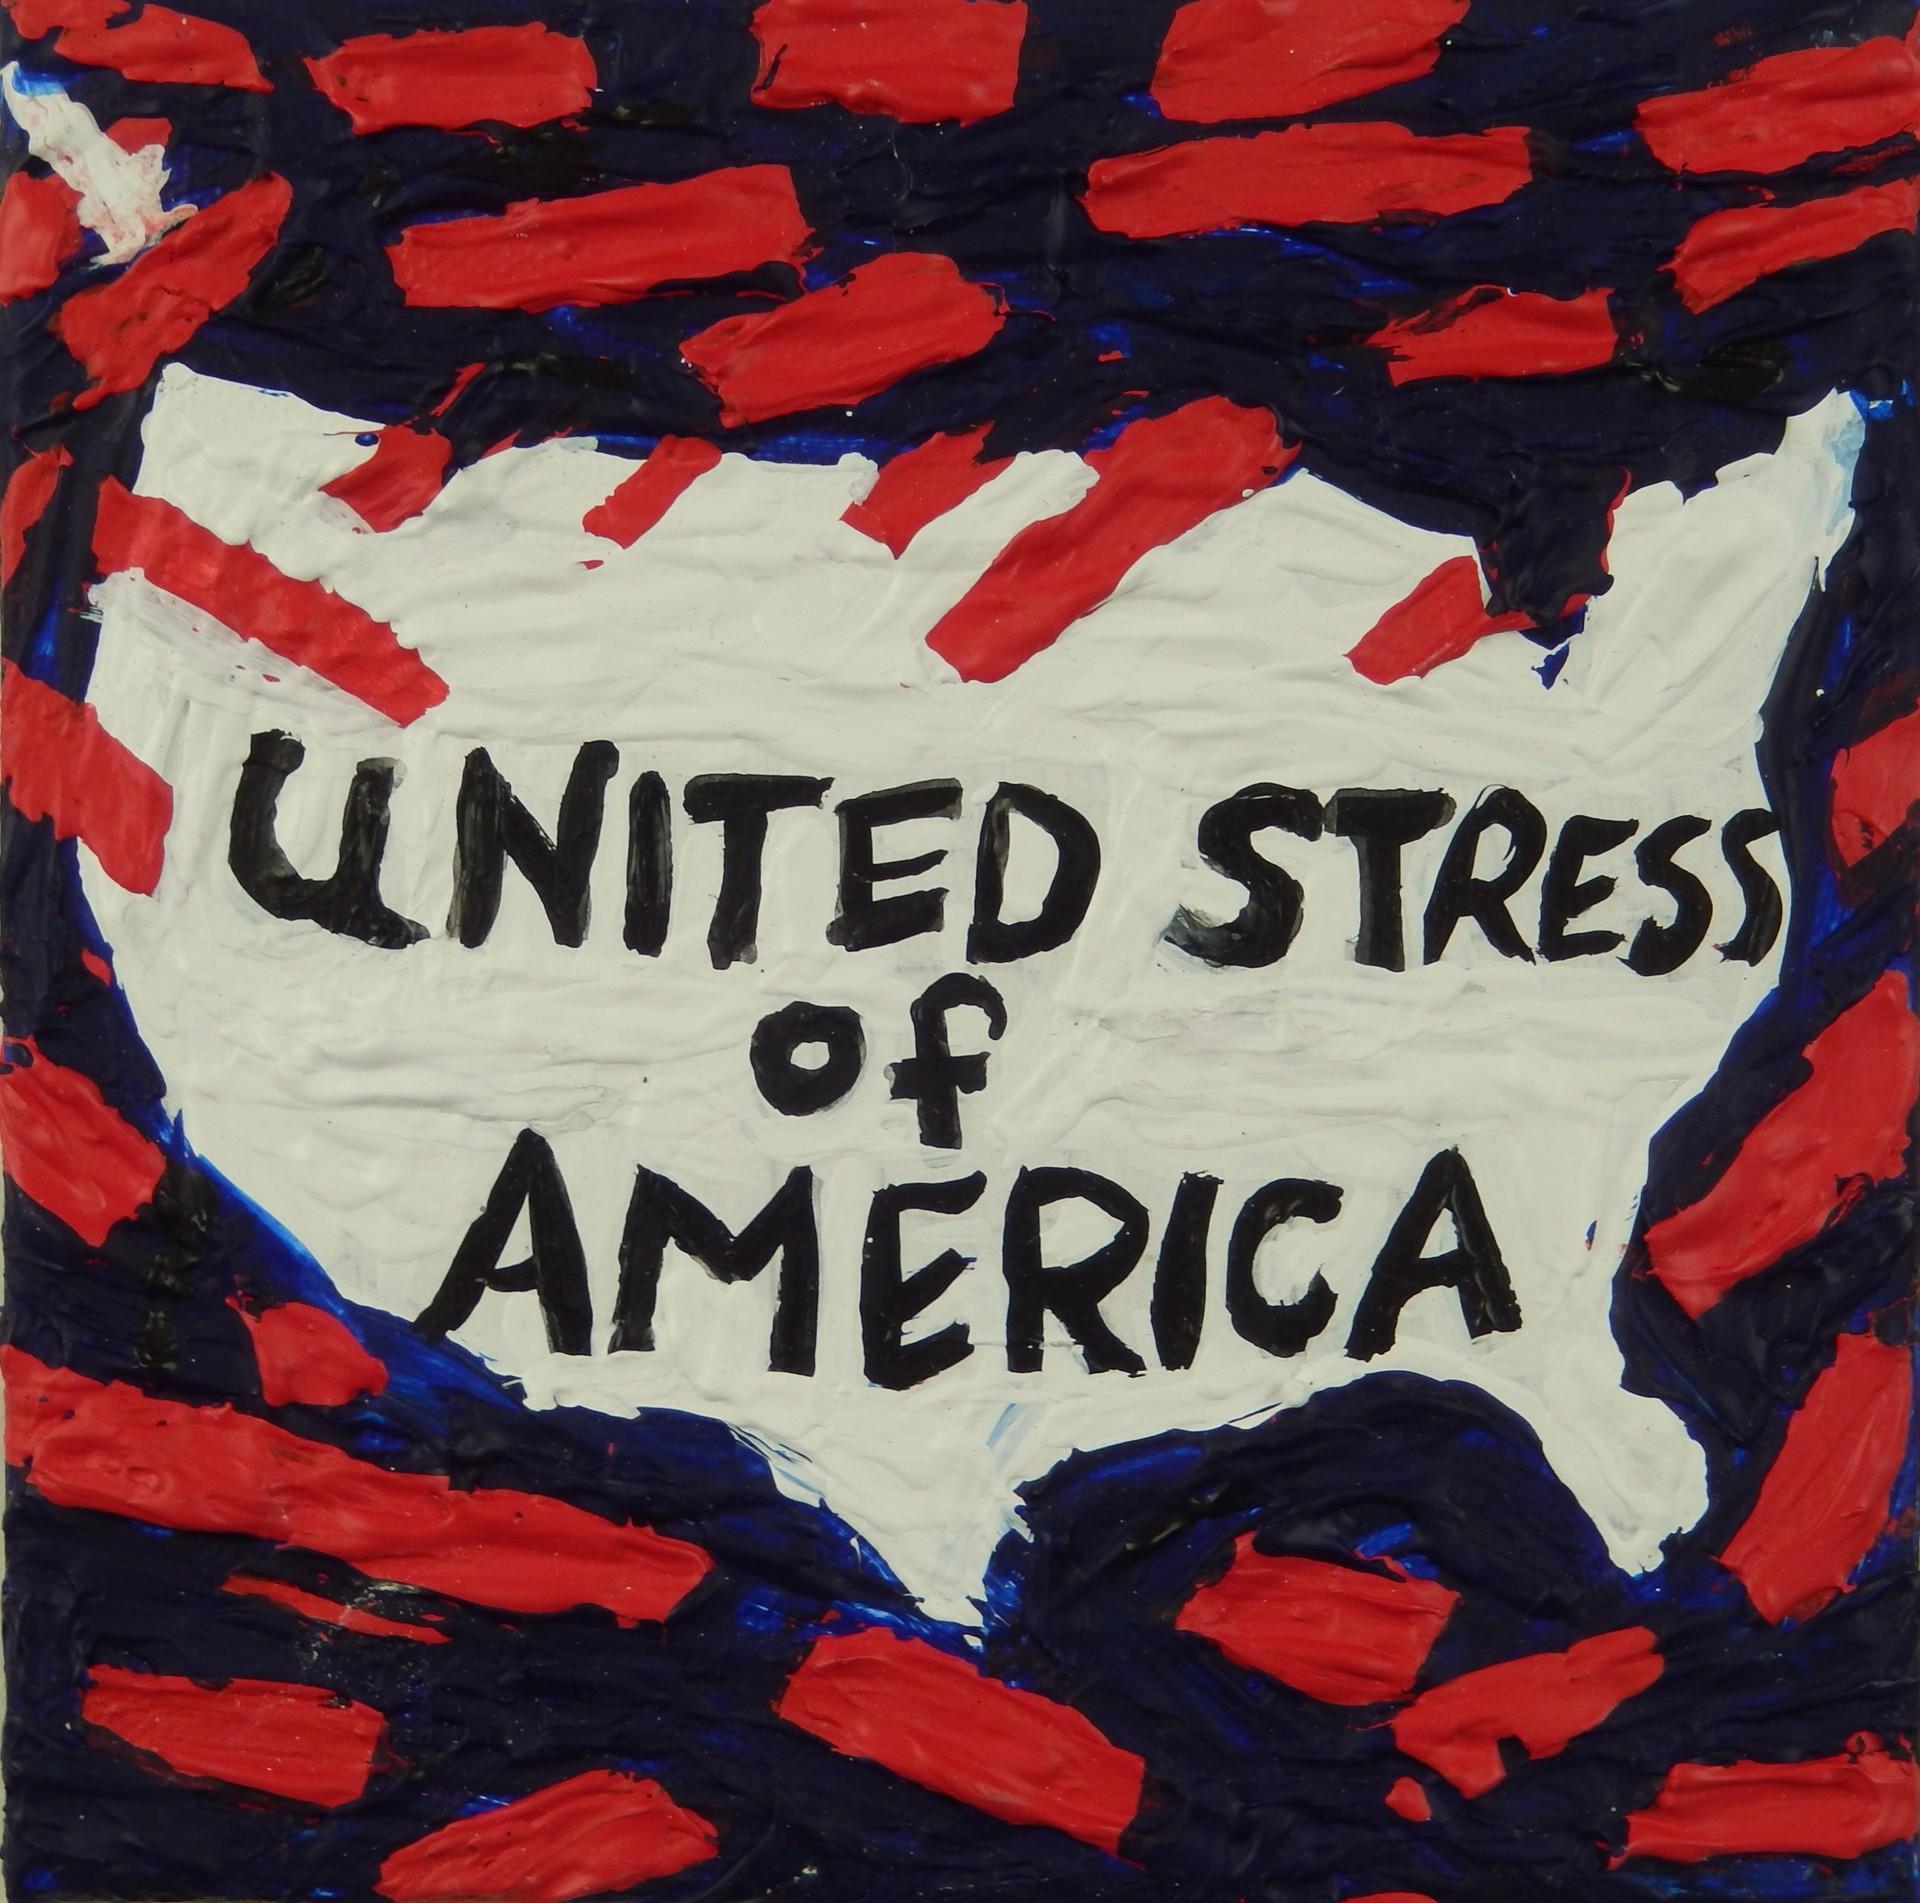 Linda Smith Figurative Painting - United Stress of America 2, 2017